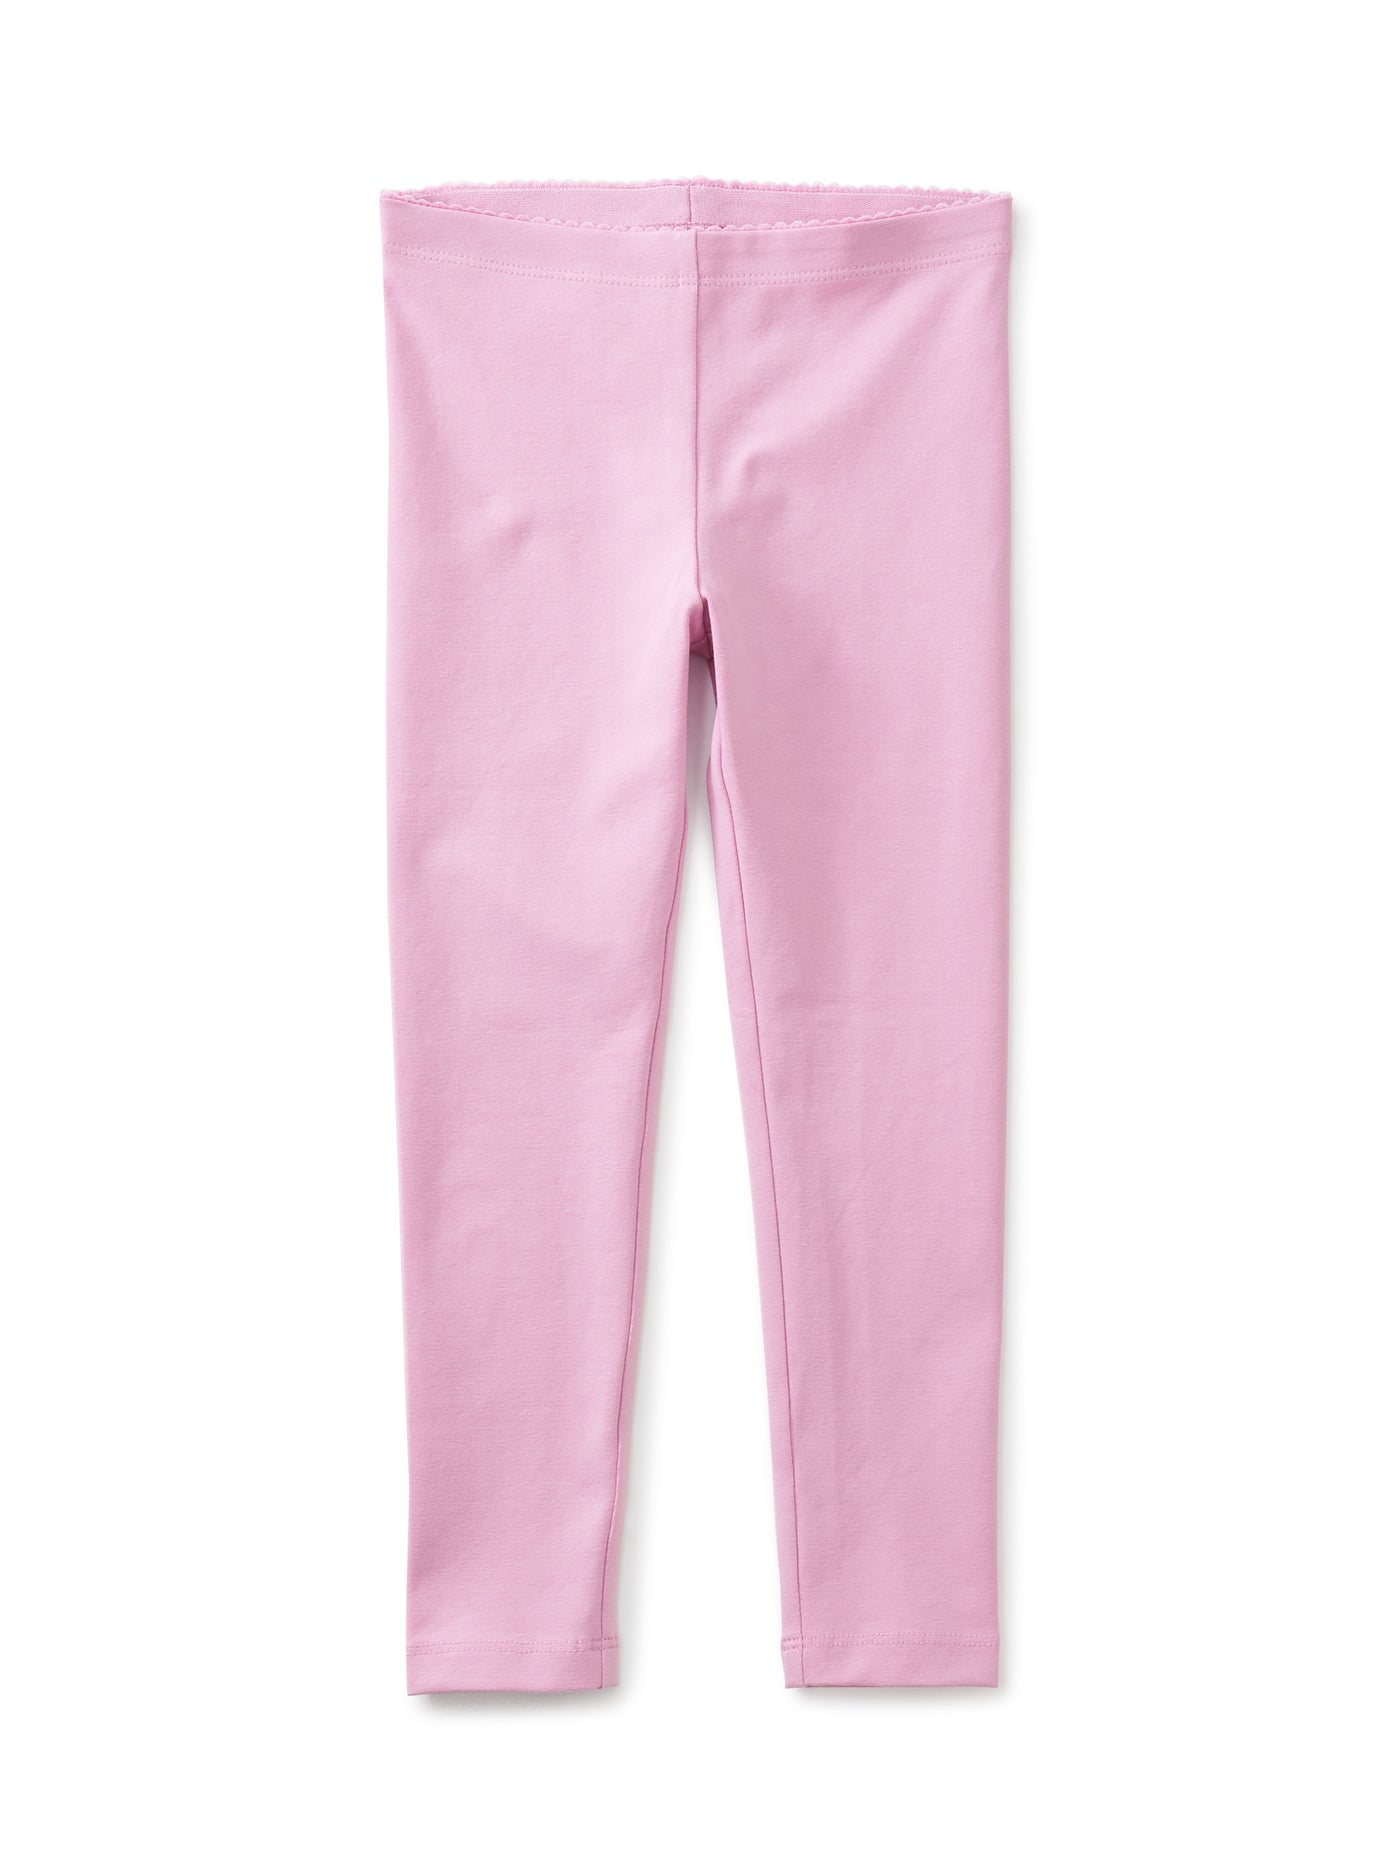 Solid Leggings in Perennial Pink